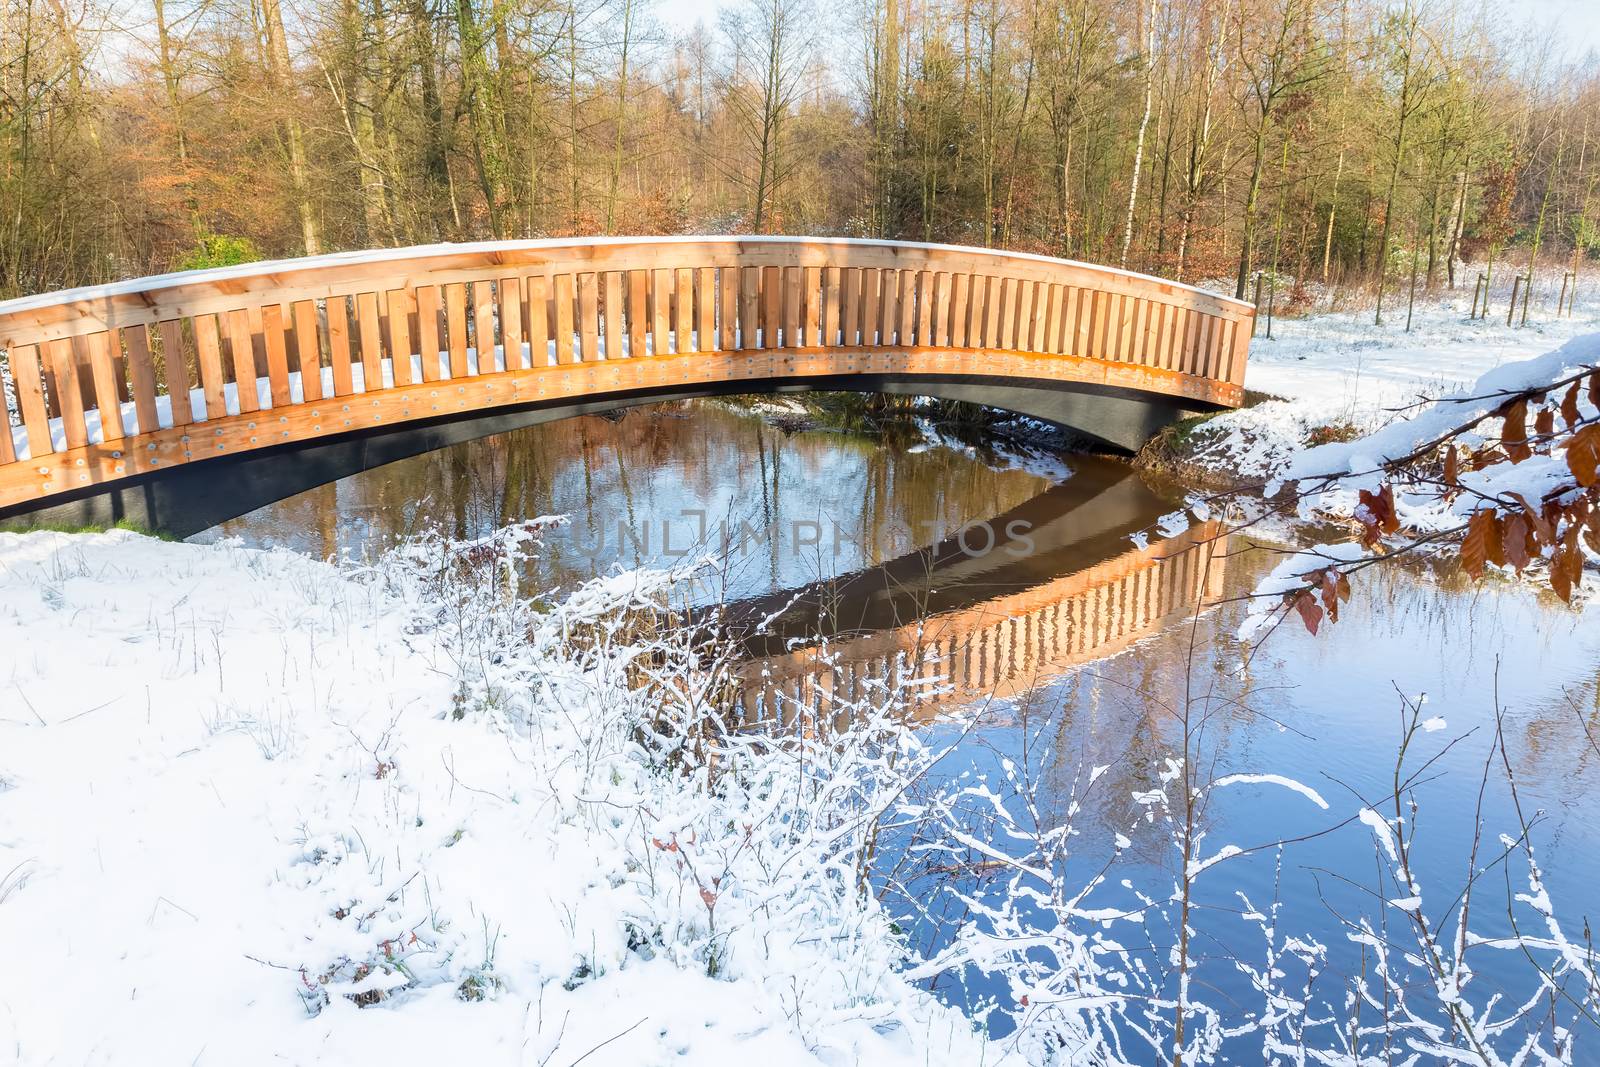 Wooden bridge snow and water in winter season by BenSchonewille